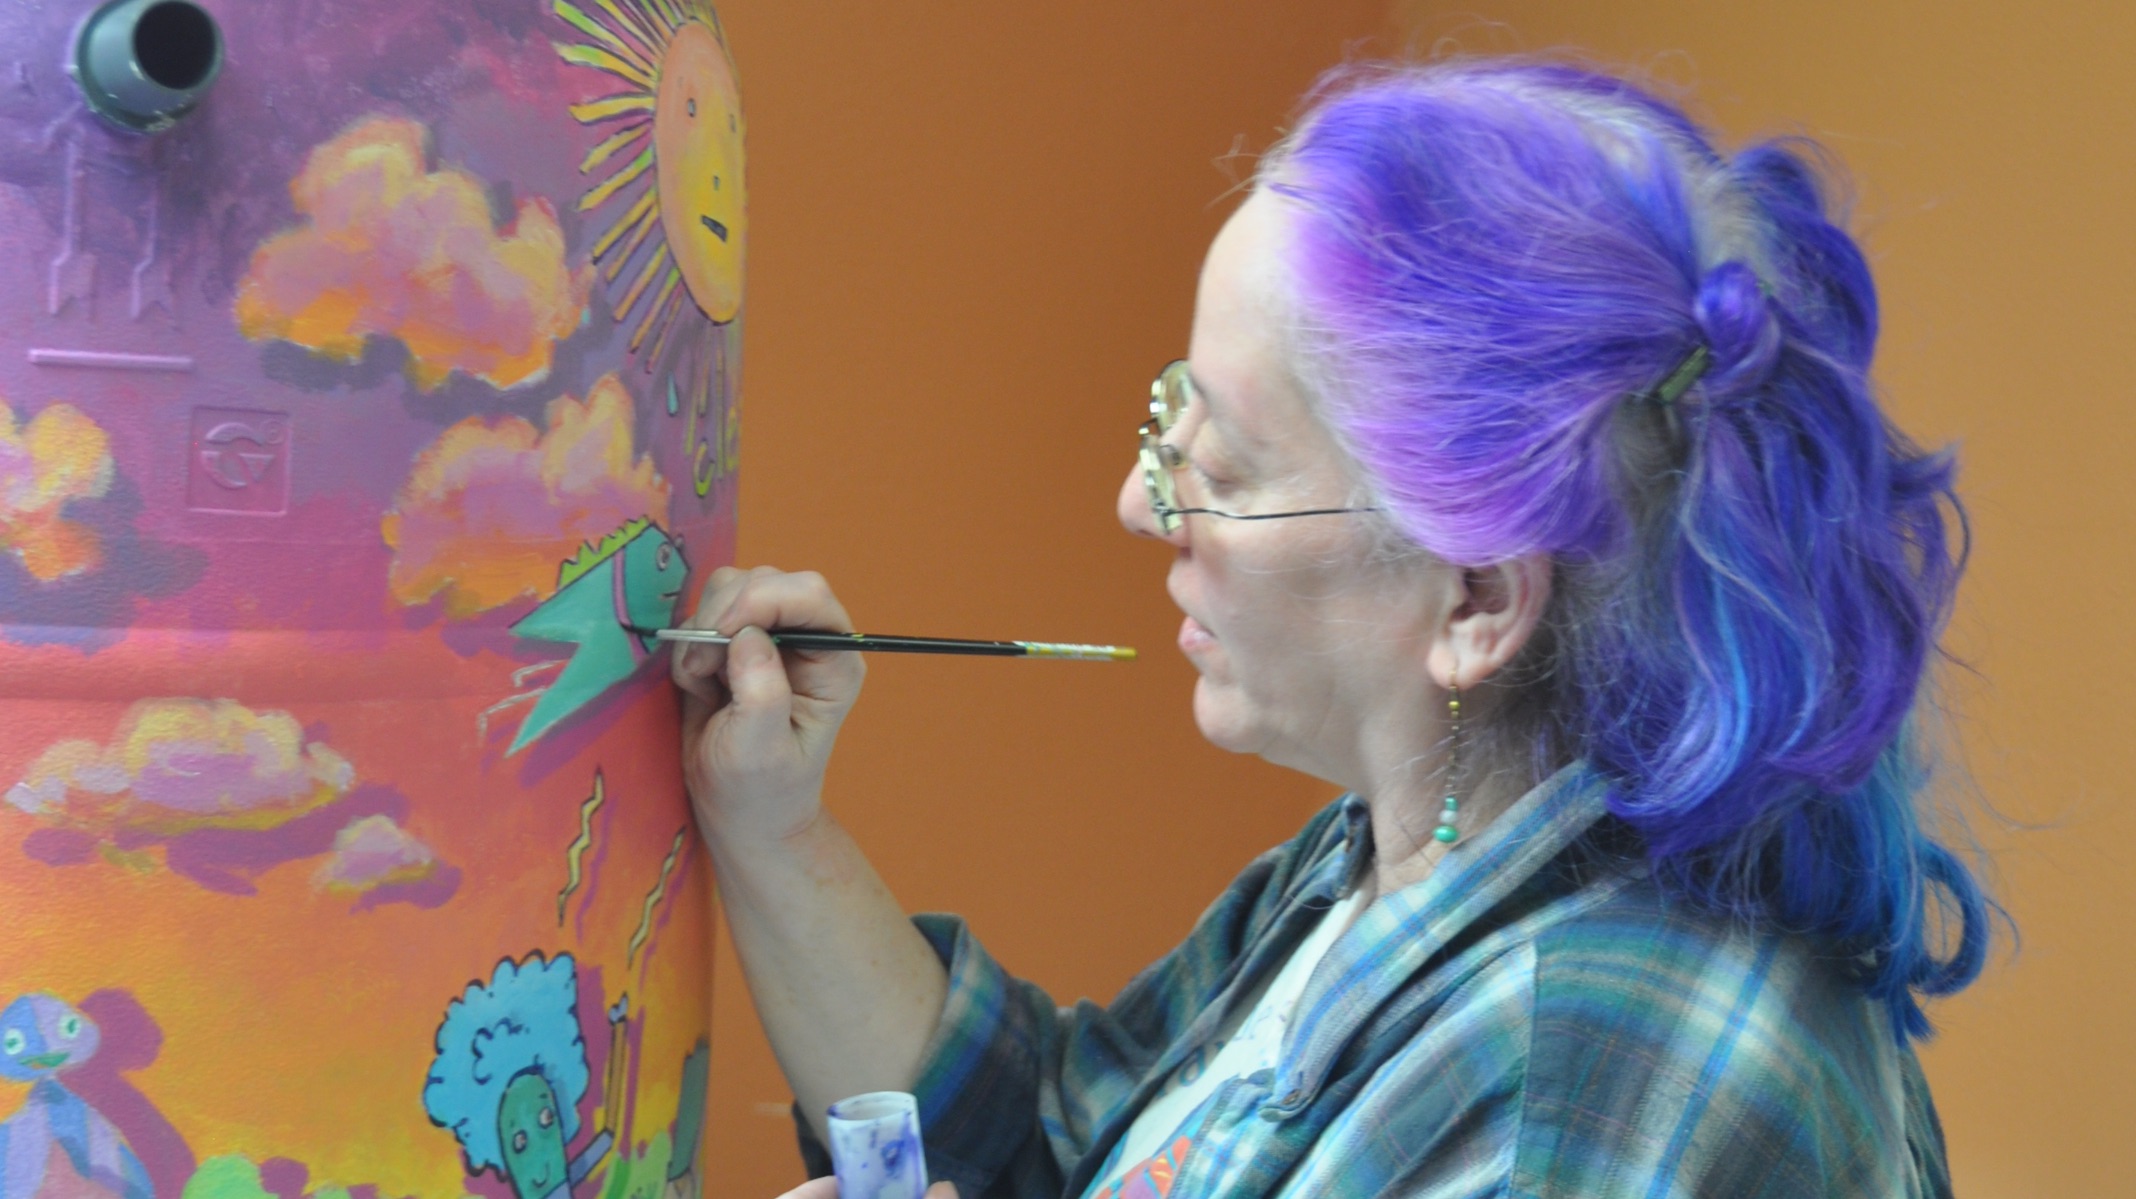 An older adult creating colorful artwork